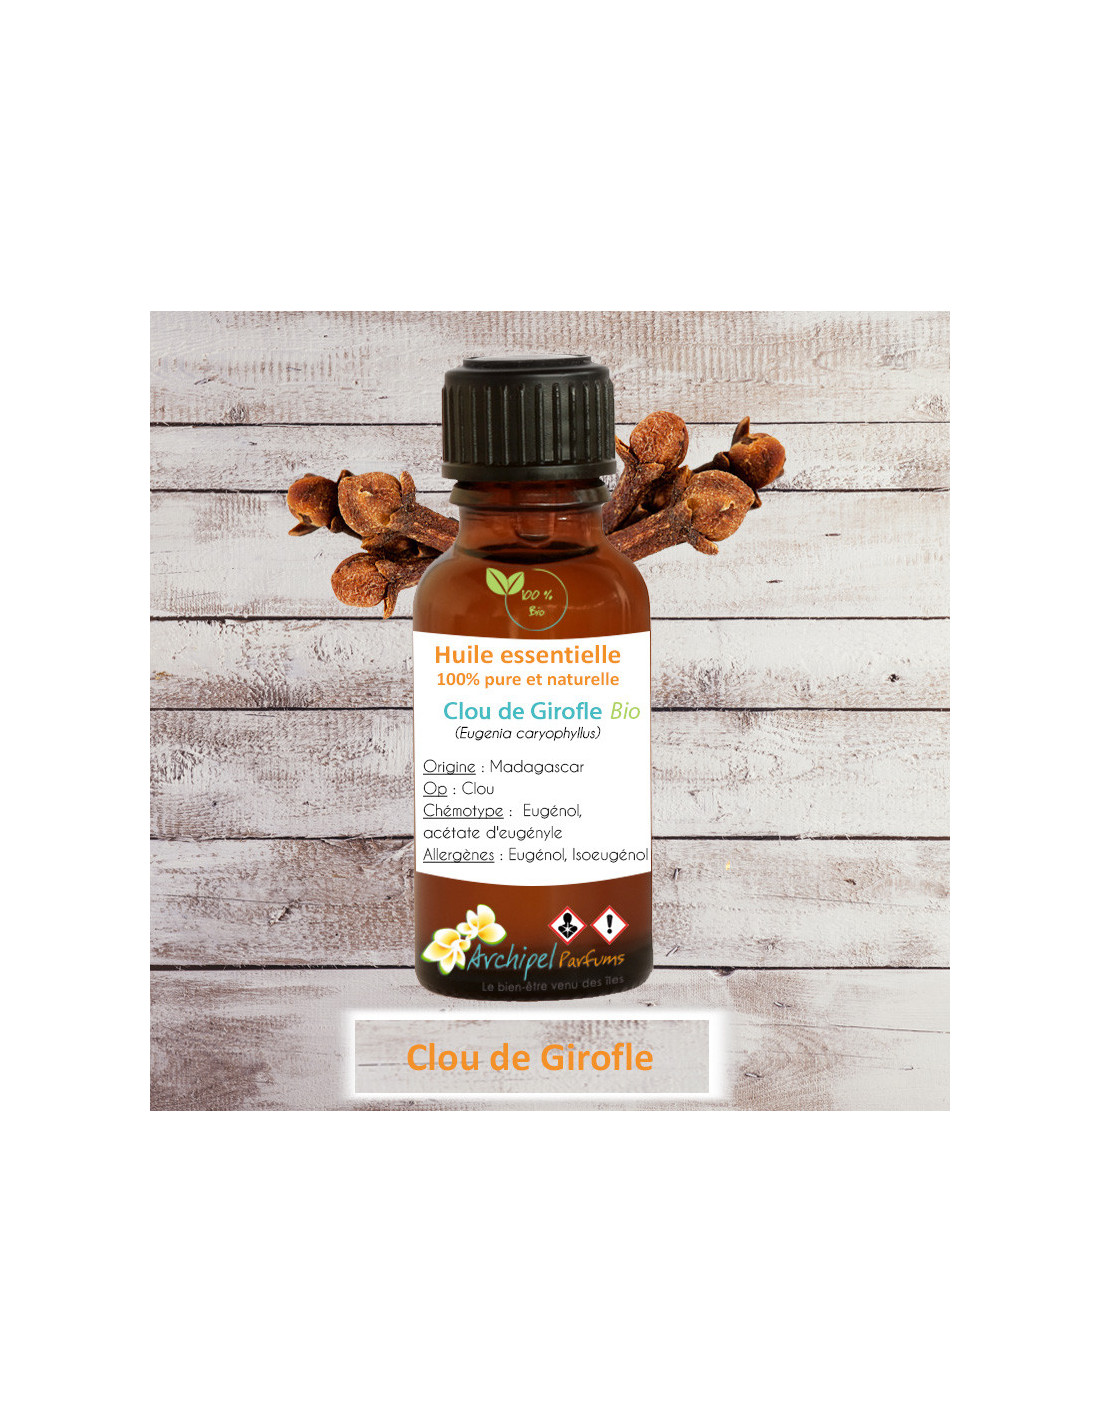 Girofle clou (Eugenia caryophyllus) huile essentielle